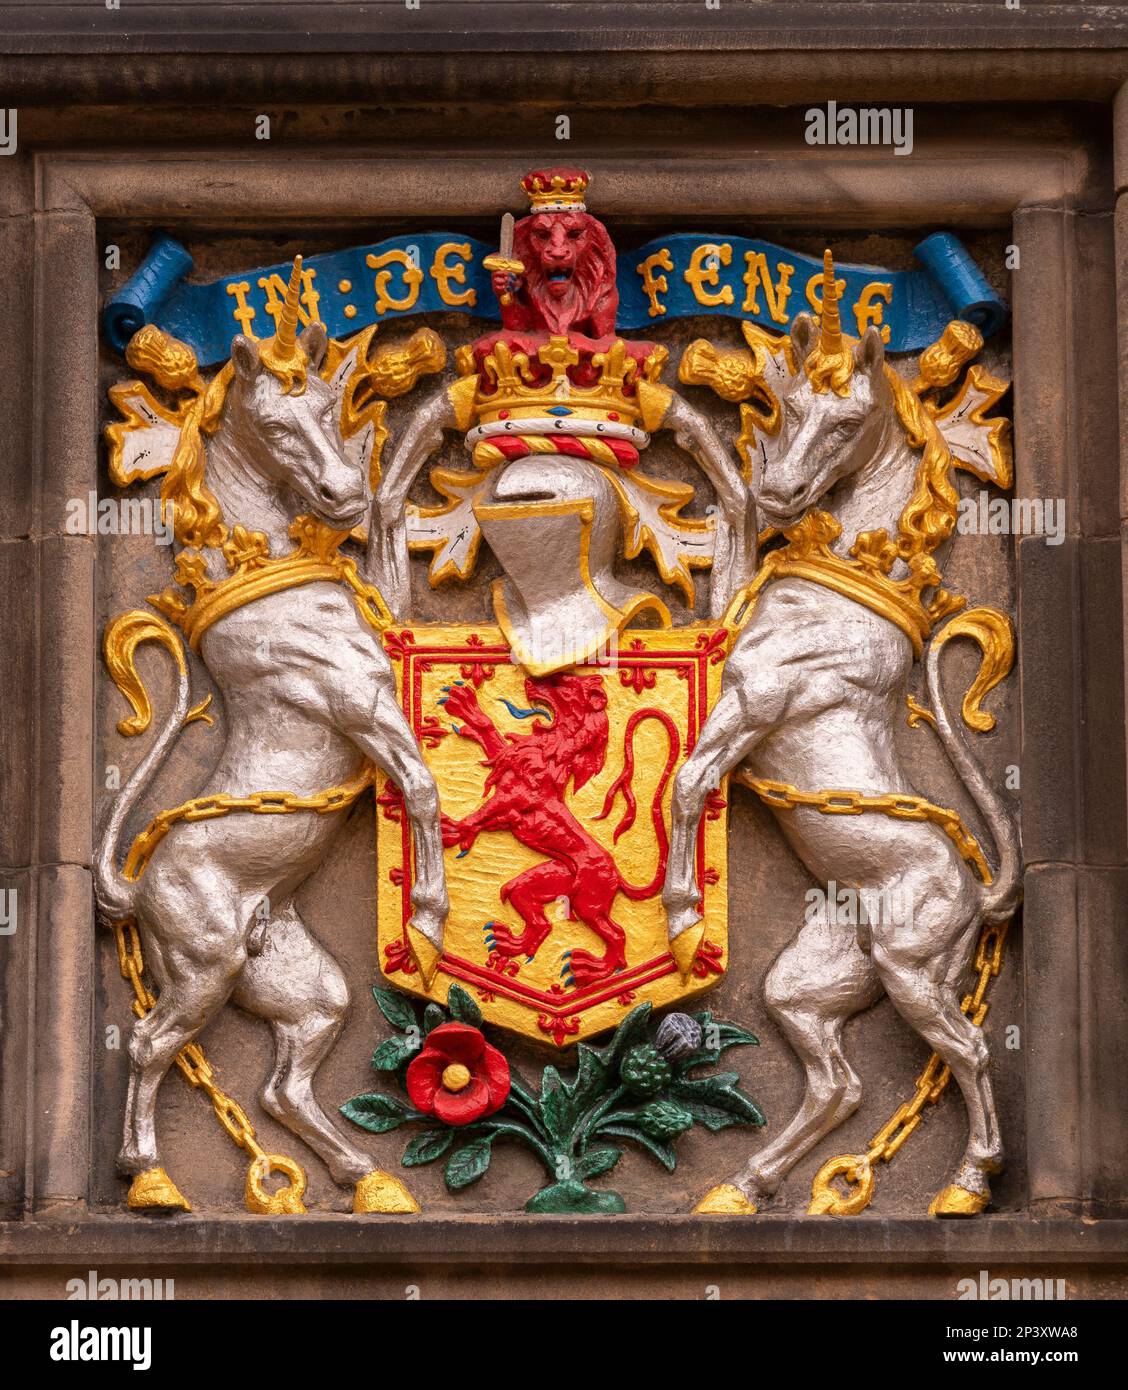 EDINBURGH, SCOTLAND, EUROPE - Coat of arms heraldry on exterior of Great Hall building, Edinburgh Castle. Stock Photo